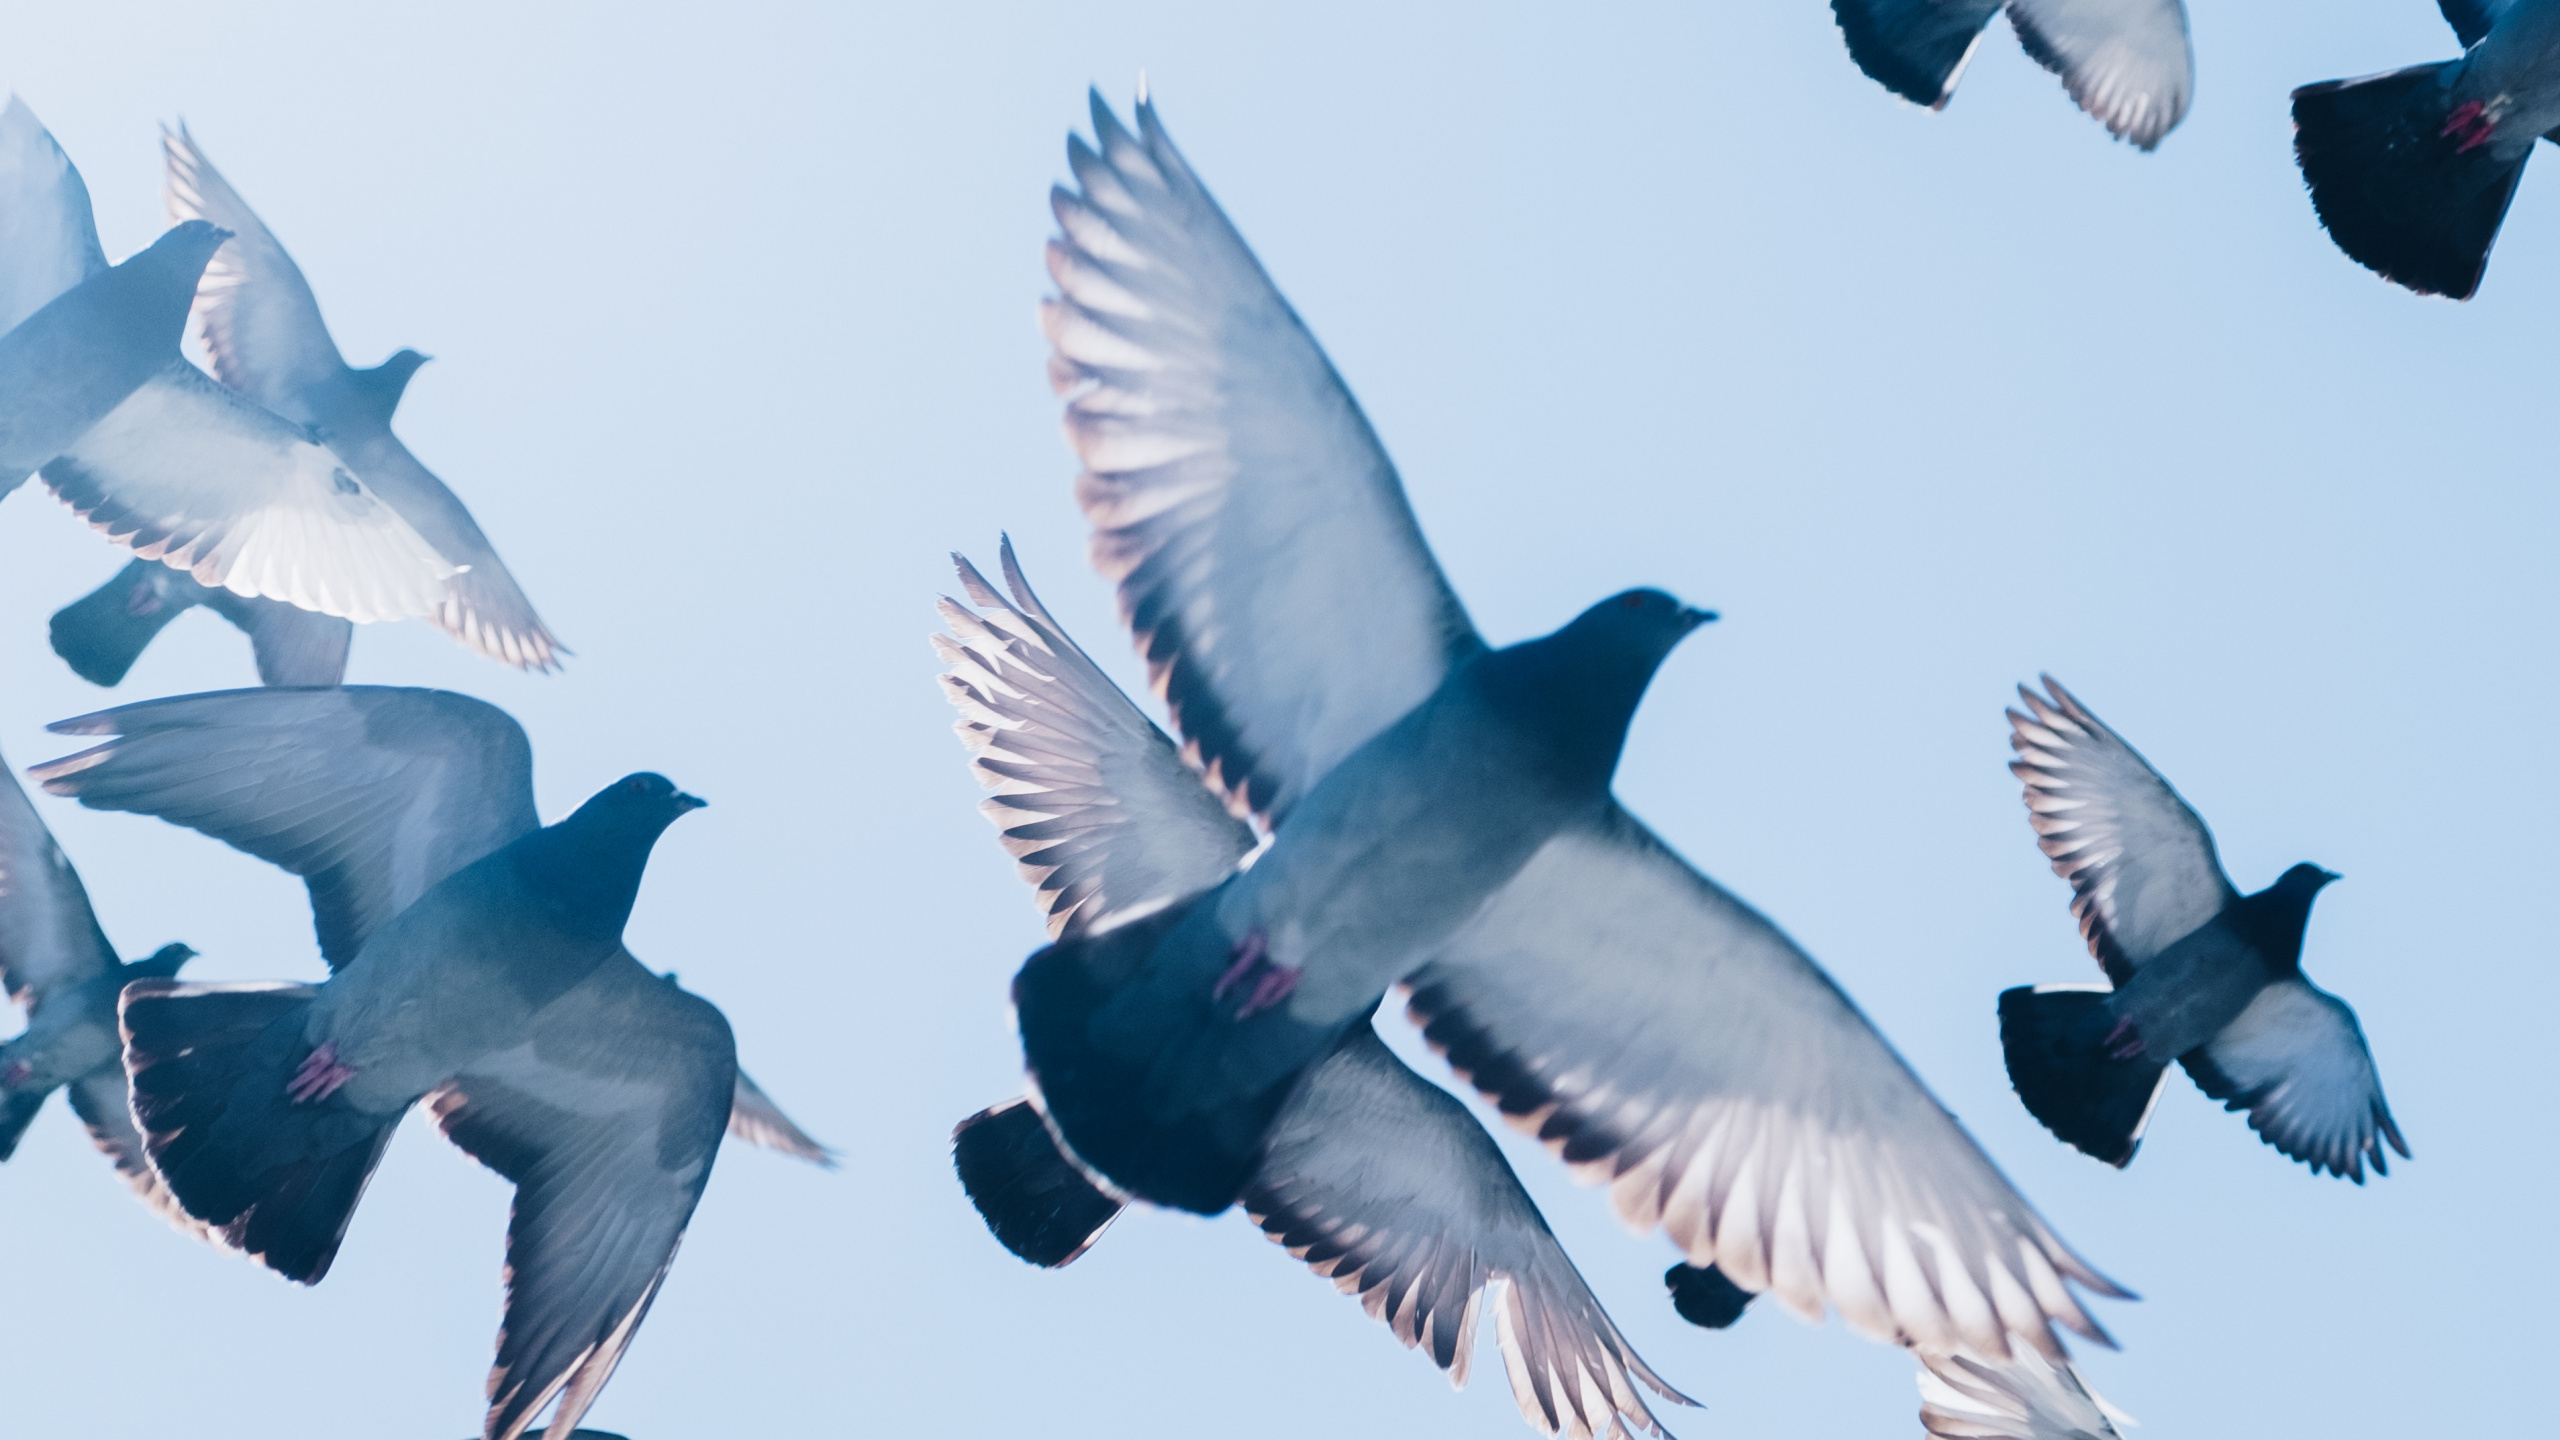 Flock of Birds Flying Under Blue Sky During Daytime. Wallpaper in 2560x1440 Resolution